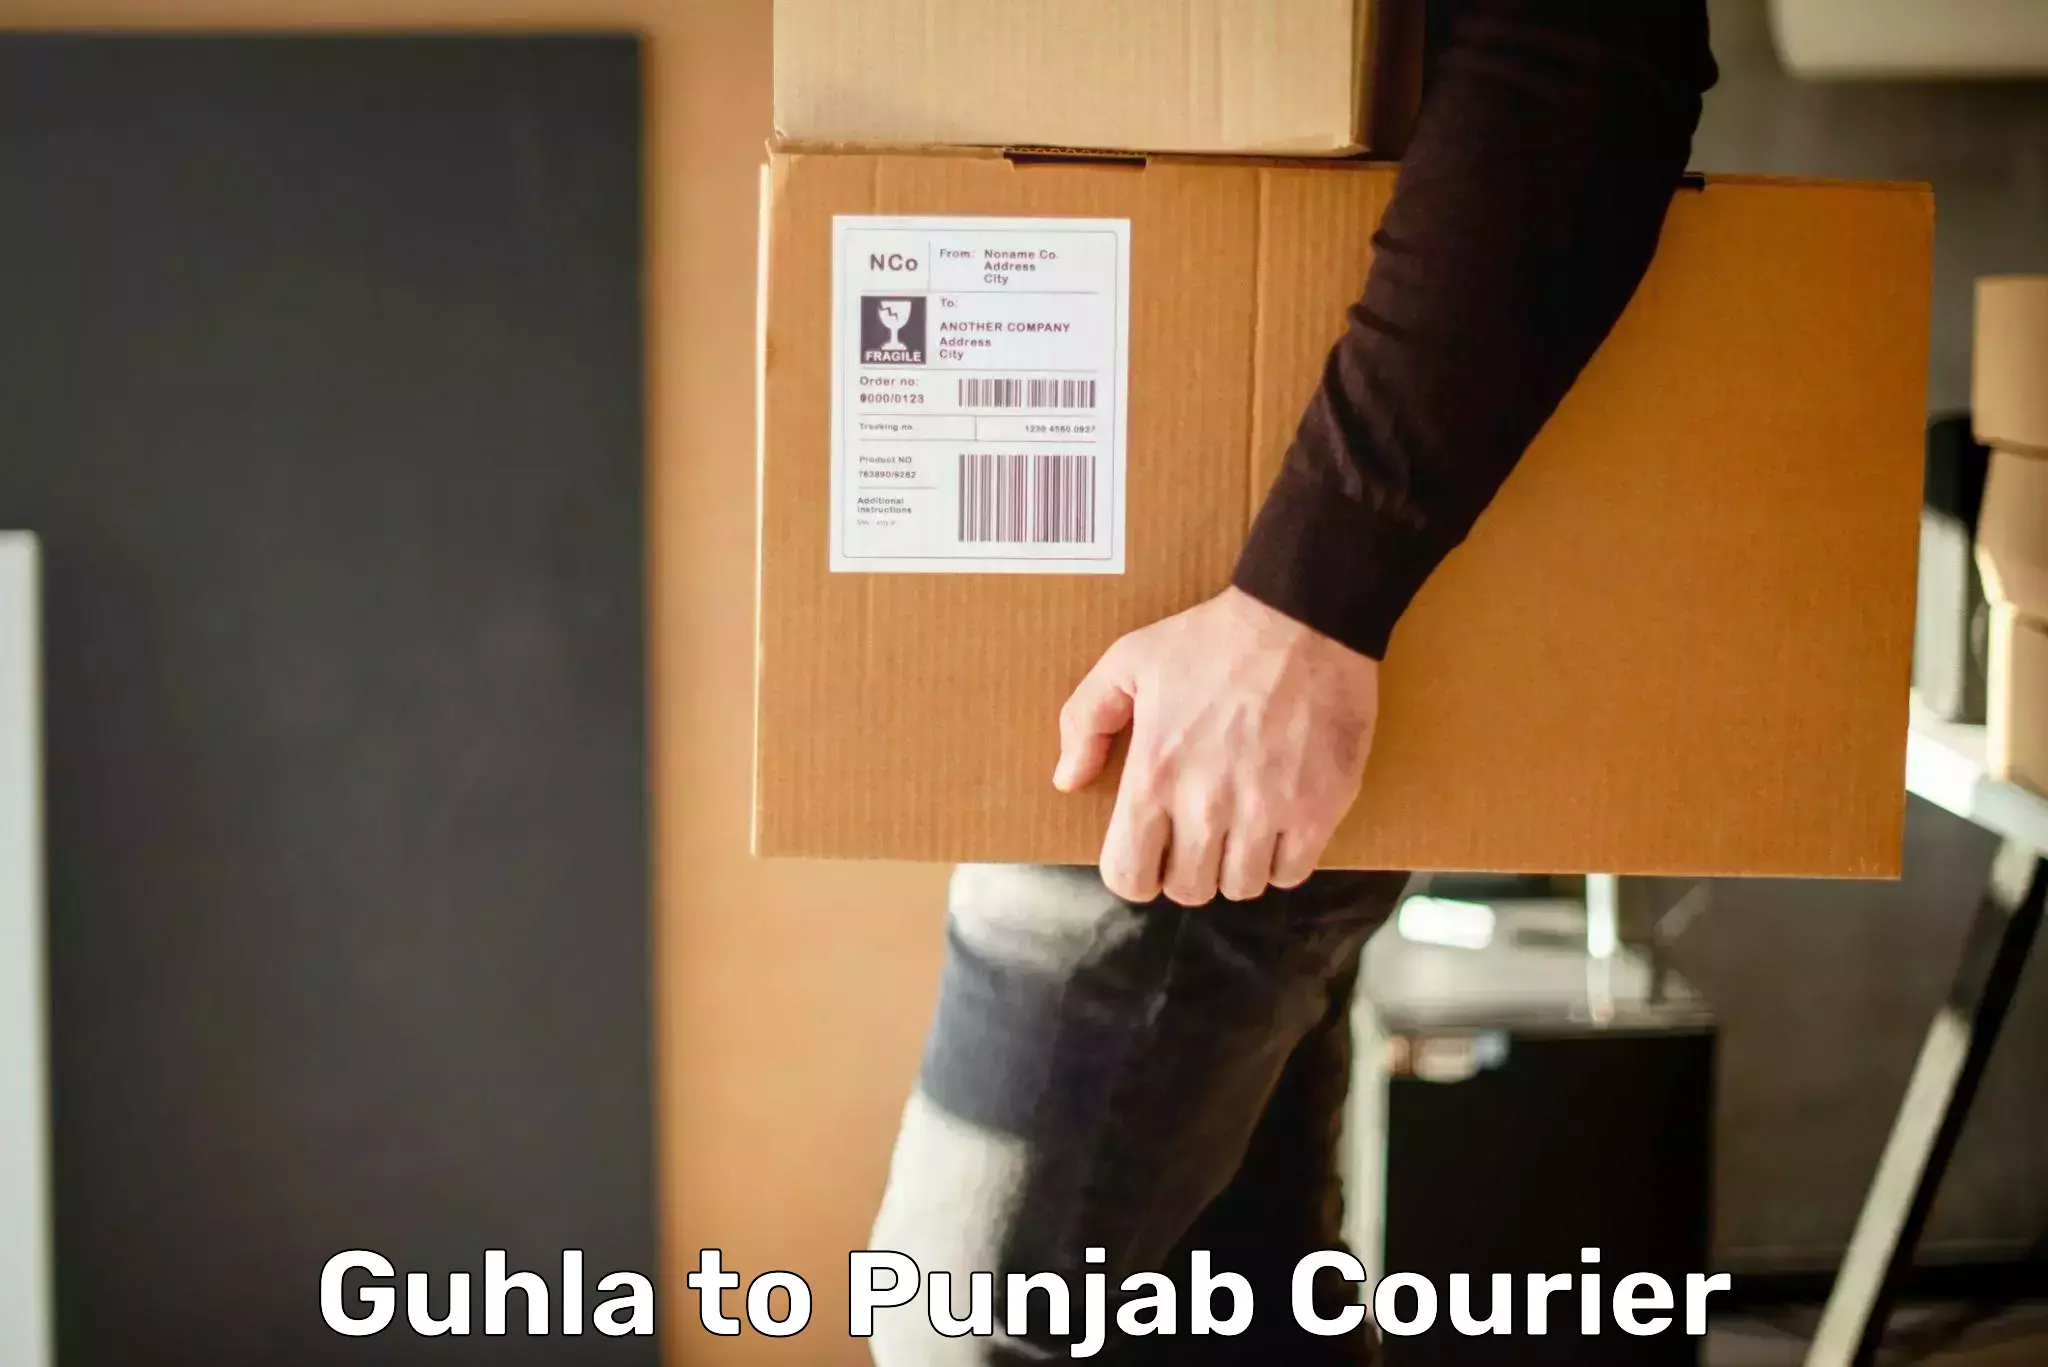 International courier networks Guhla to Punjab